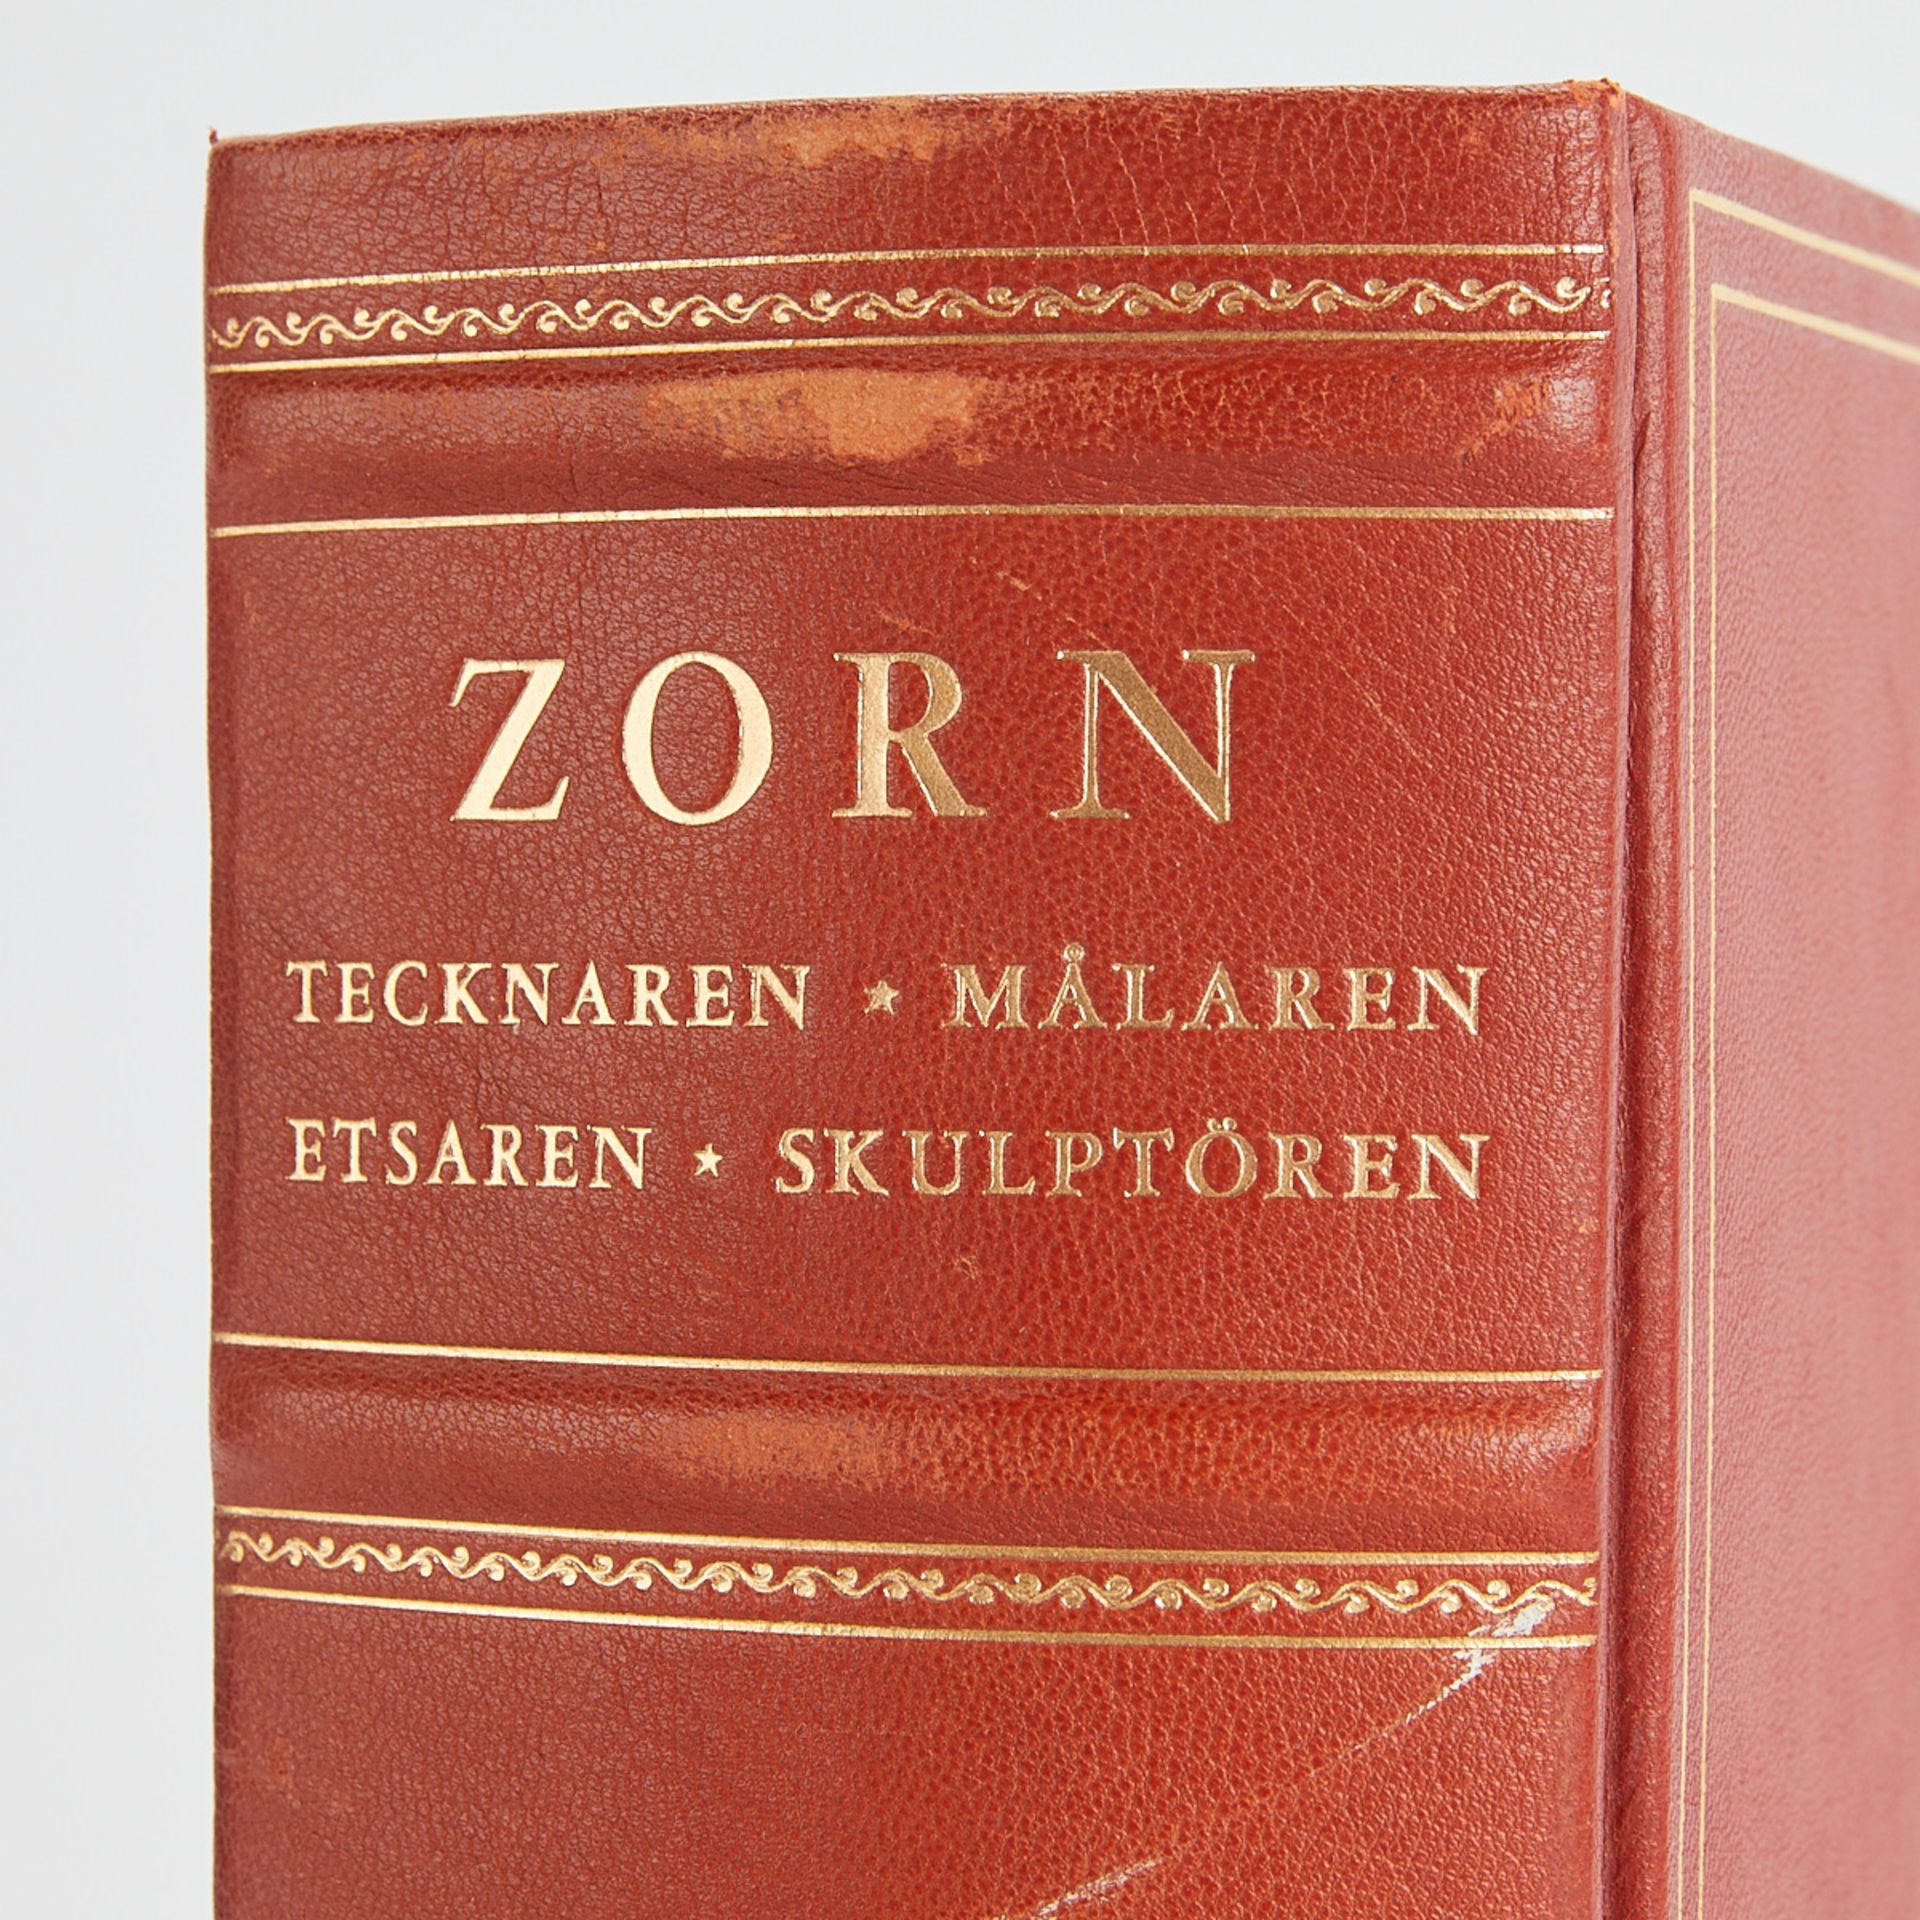 Gerda Boethius "Zorn" Book 1949 - Image 5 of 8